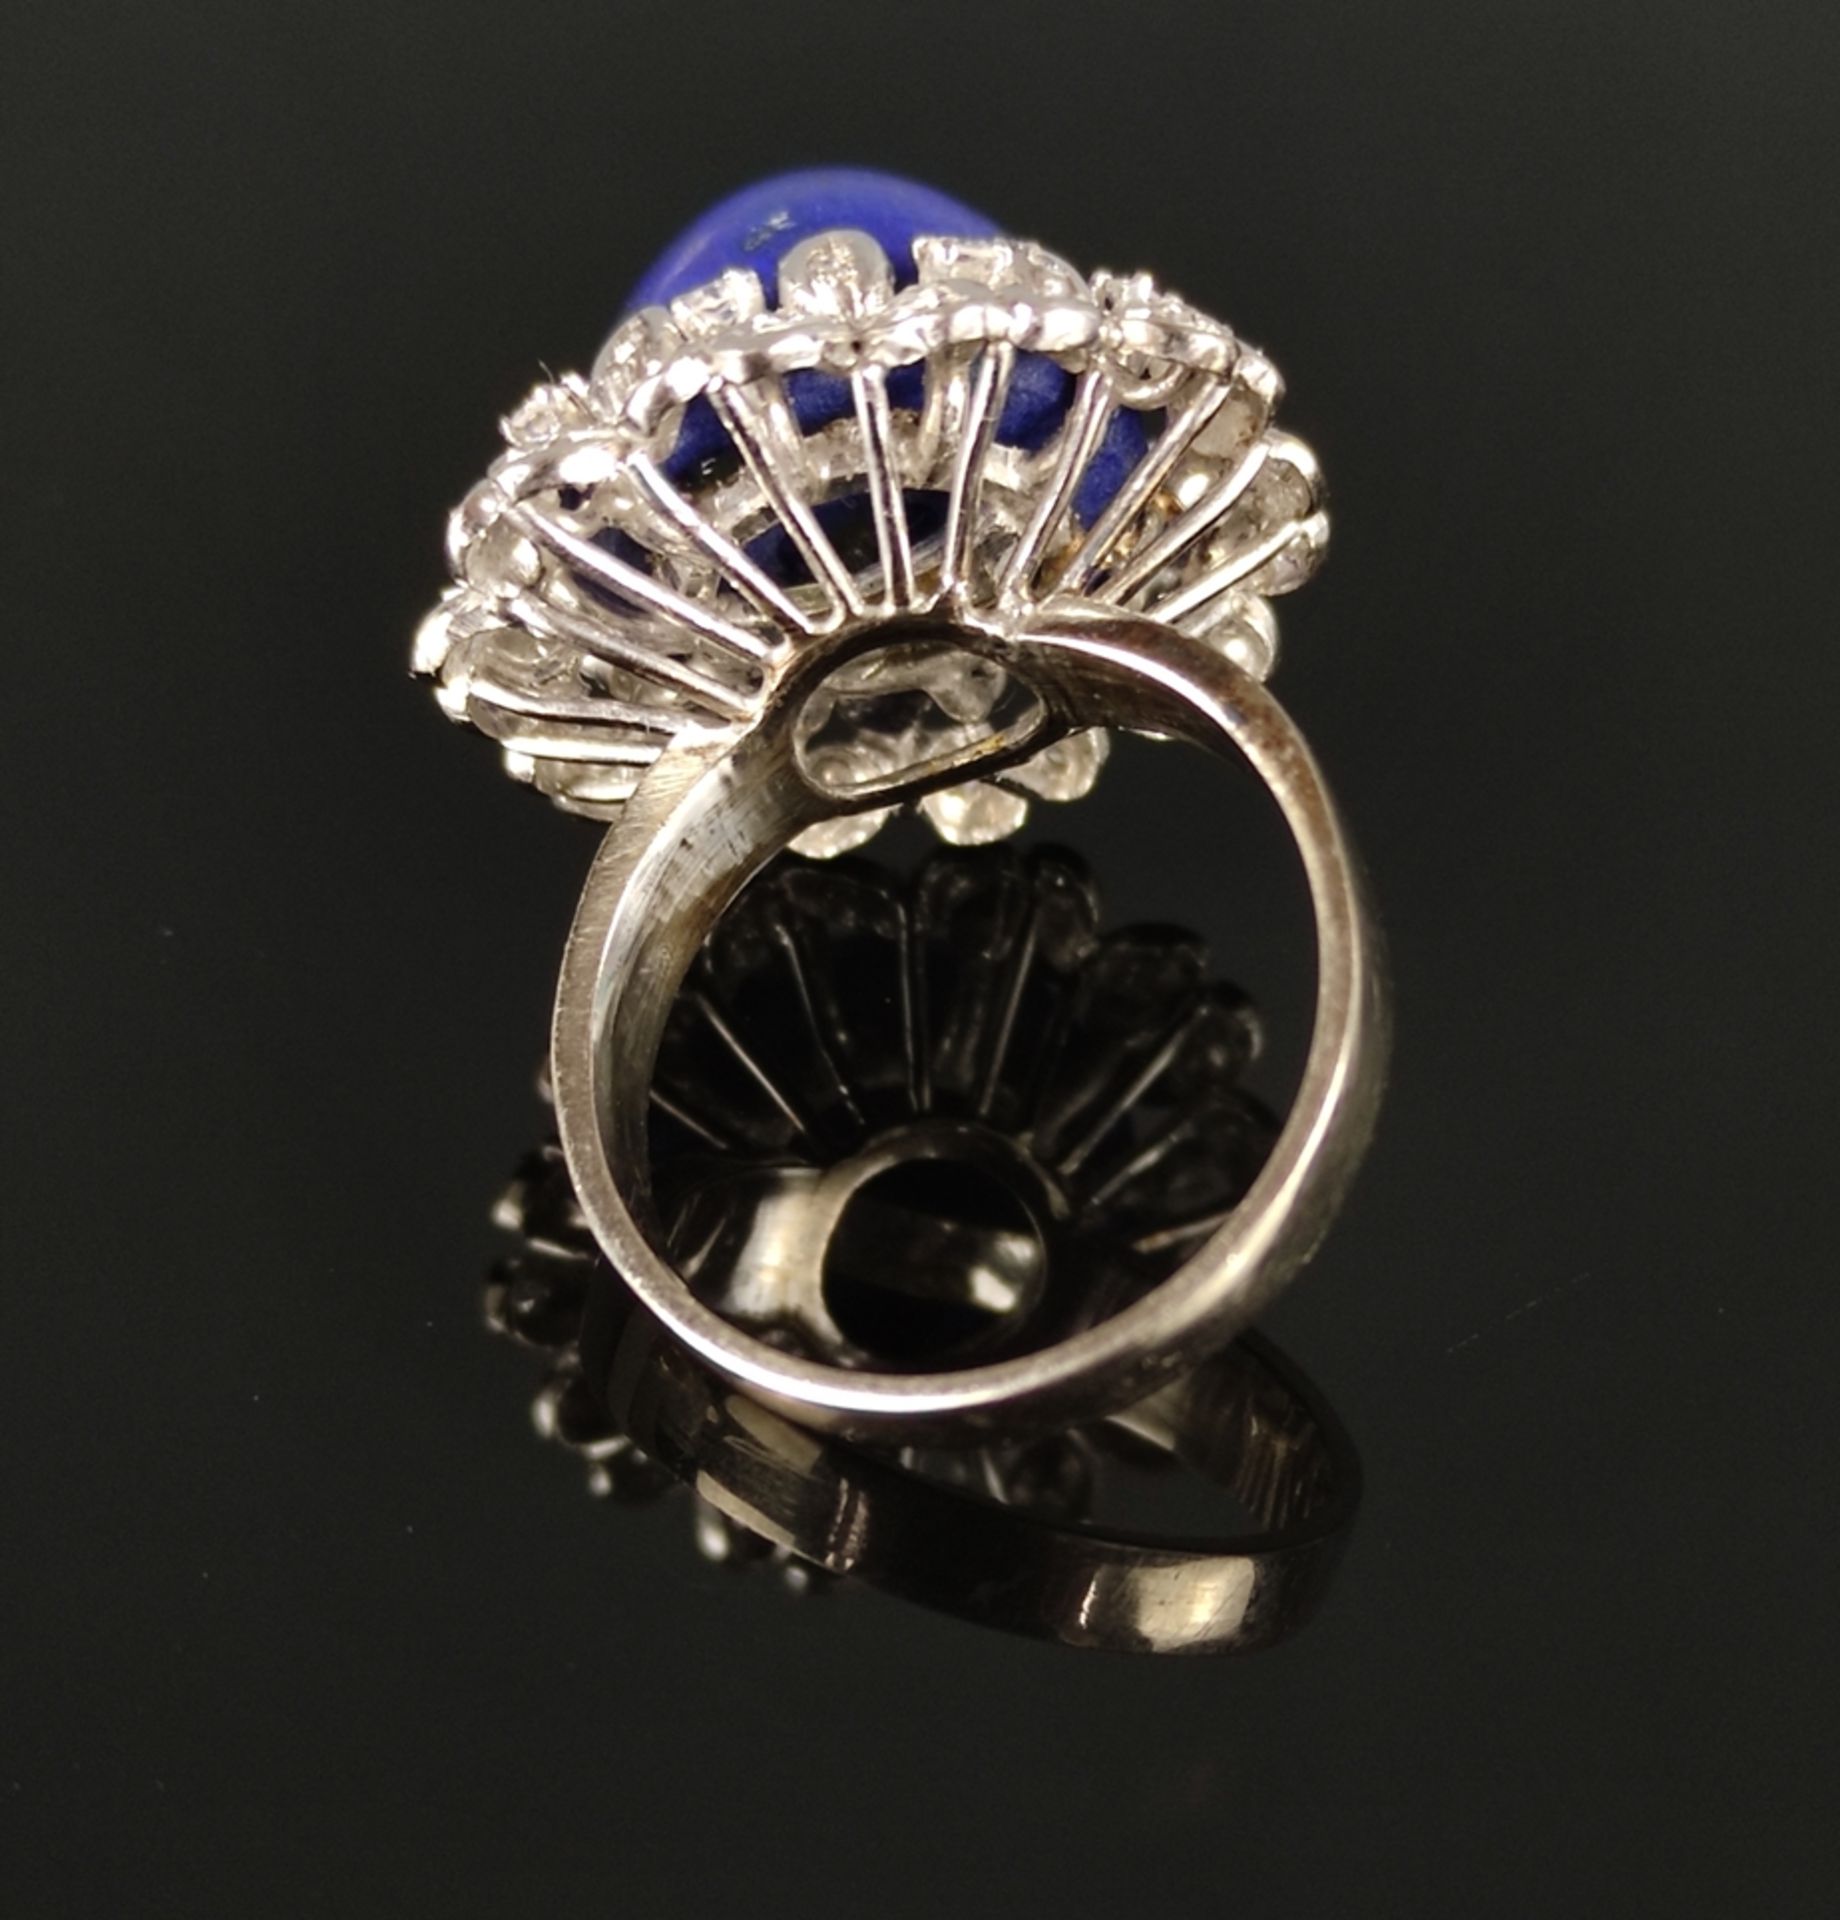 Lapis lazuli diamond ring, cone-shaped lapis lazuli set by 40 brilliant-cut diamonds as a flower wr - Image 4 of 4